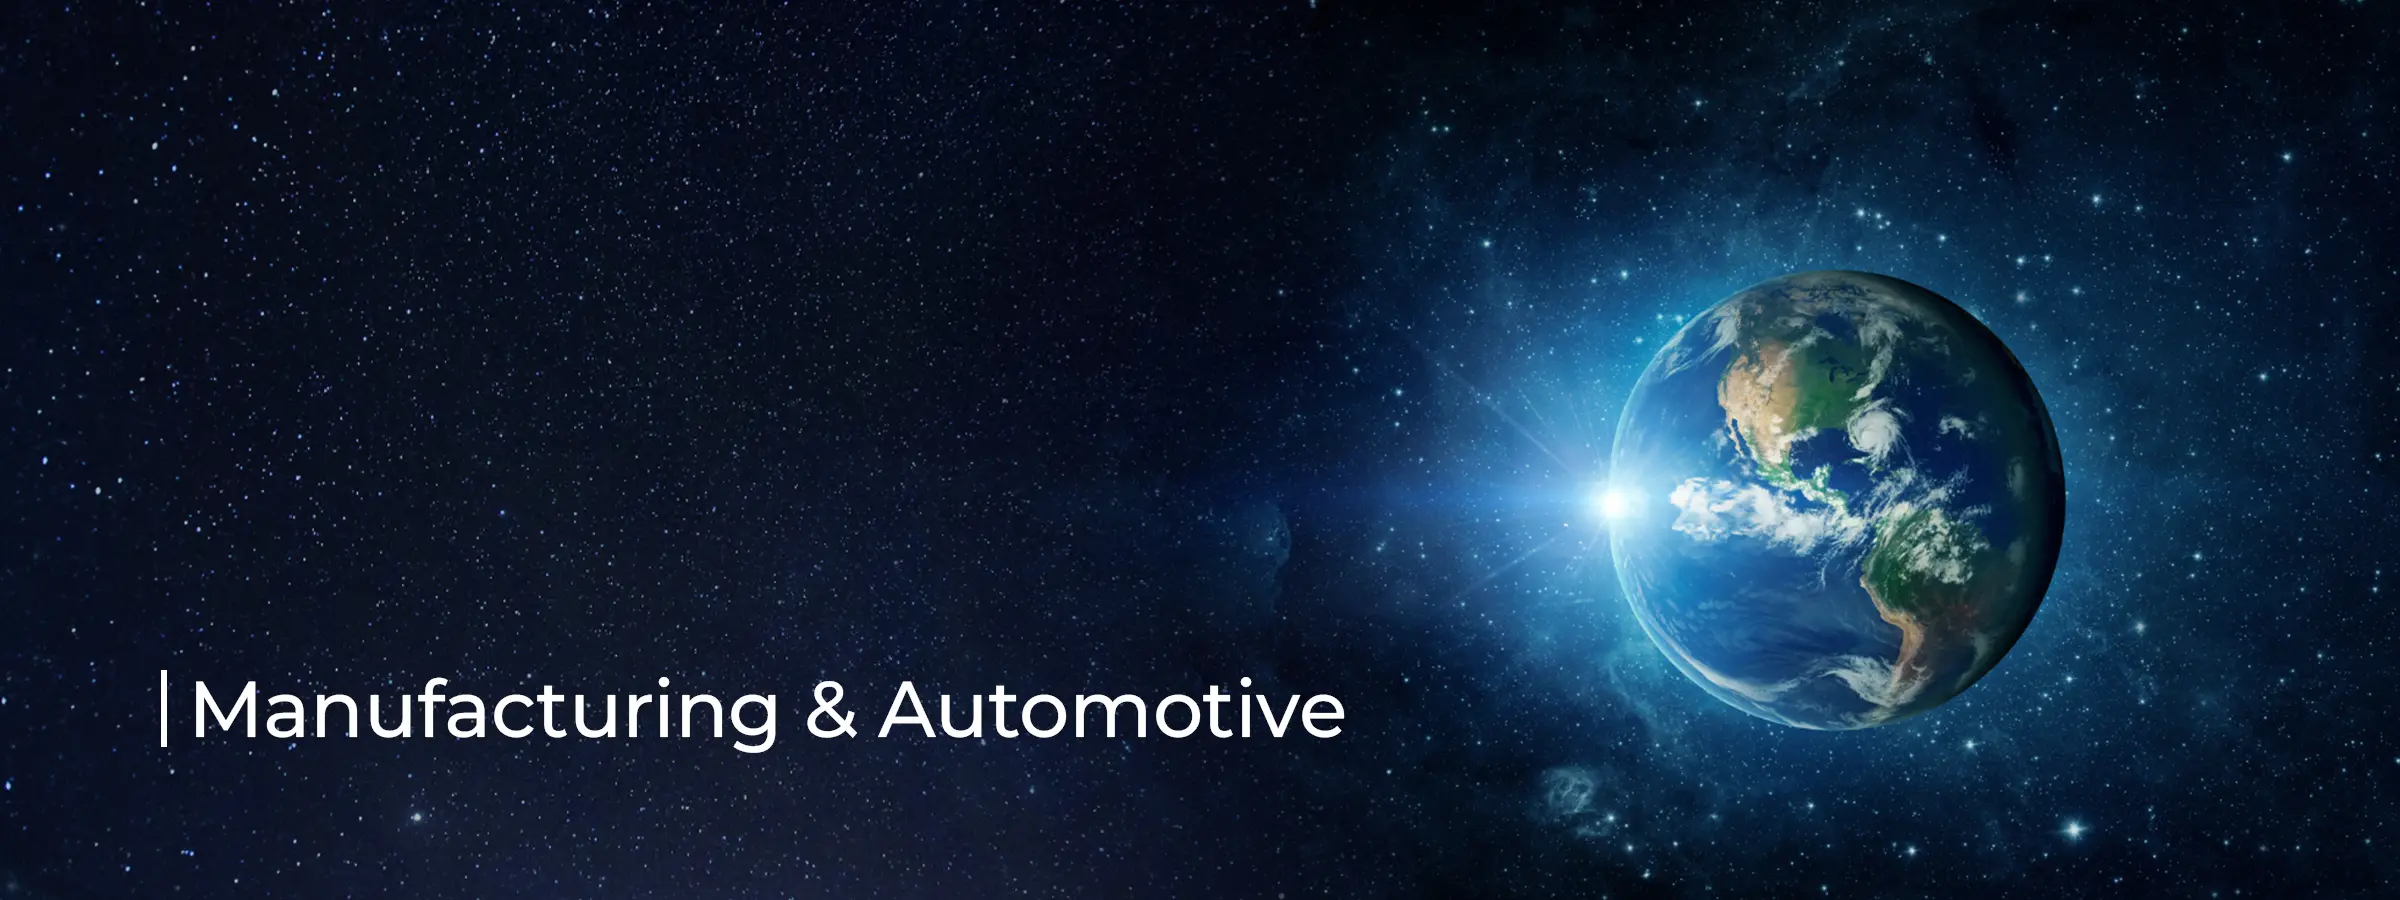 manufacturing-automotive-banner